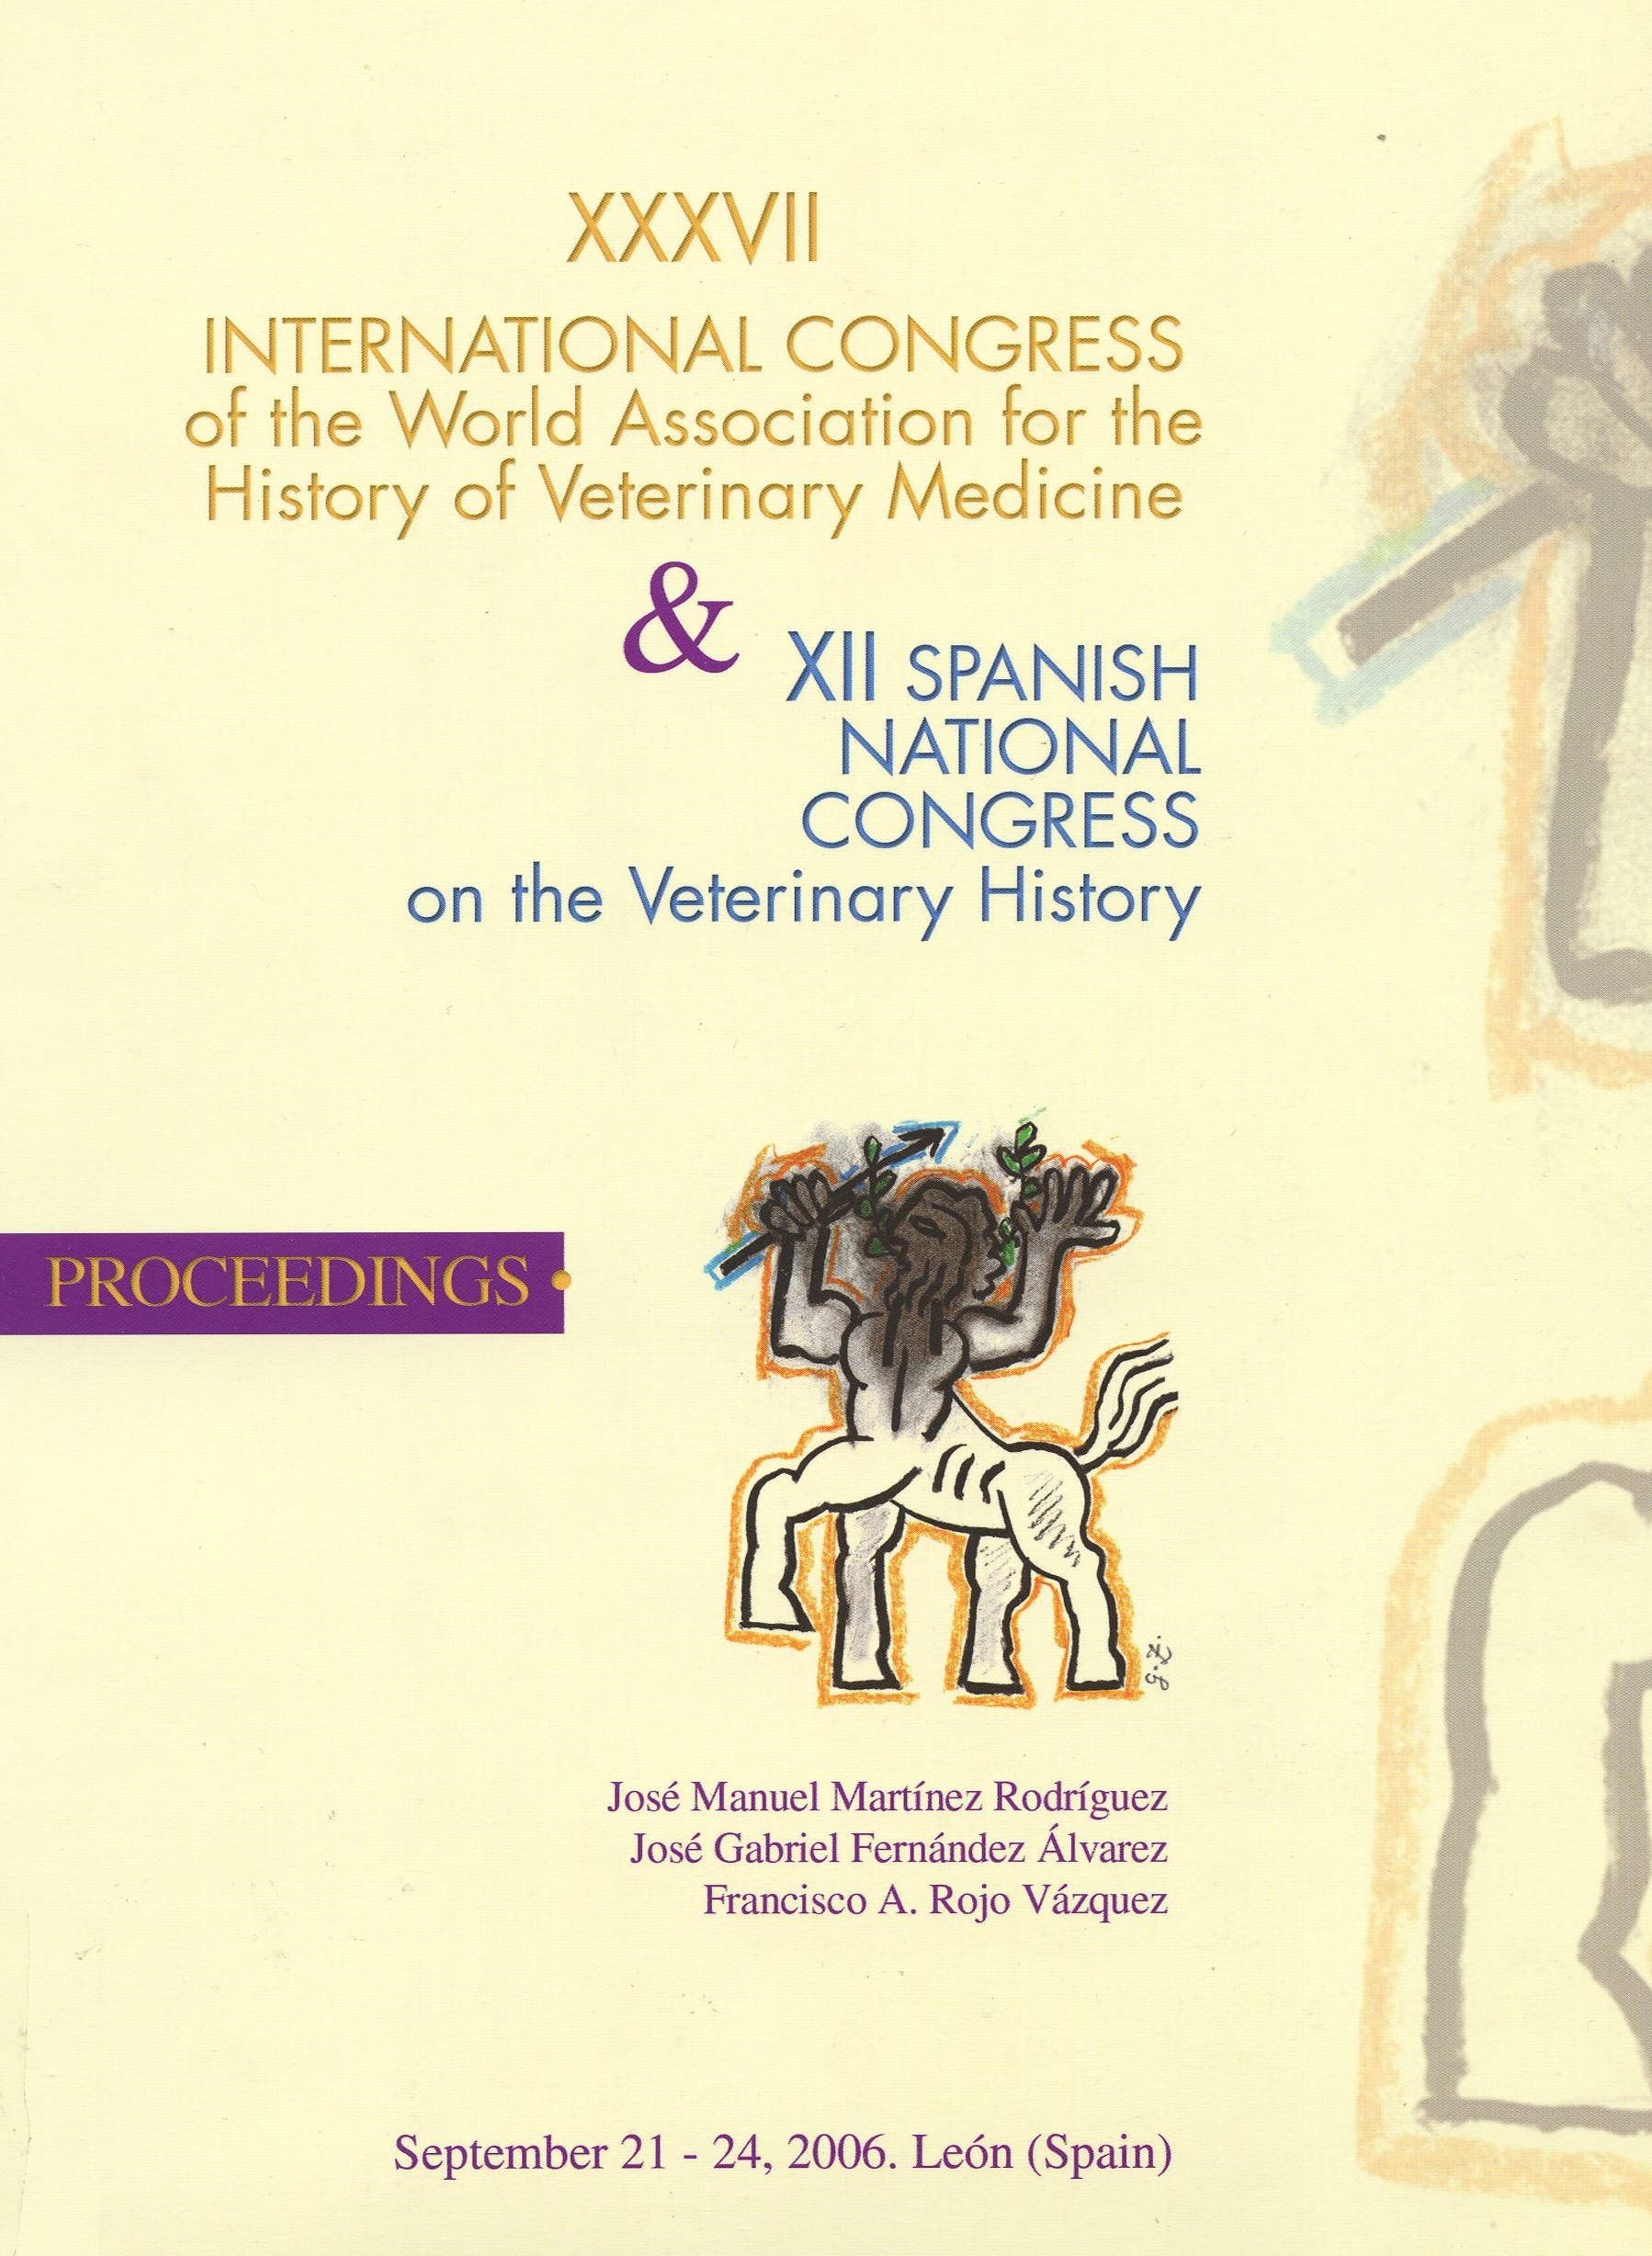 Imagen de portada del libro Proceedings of the XXXVII International Congress of the World Association for the History of Veterinary Medicine & XII Spanish National Congress on the Veterinary History